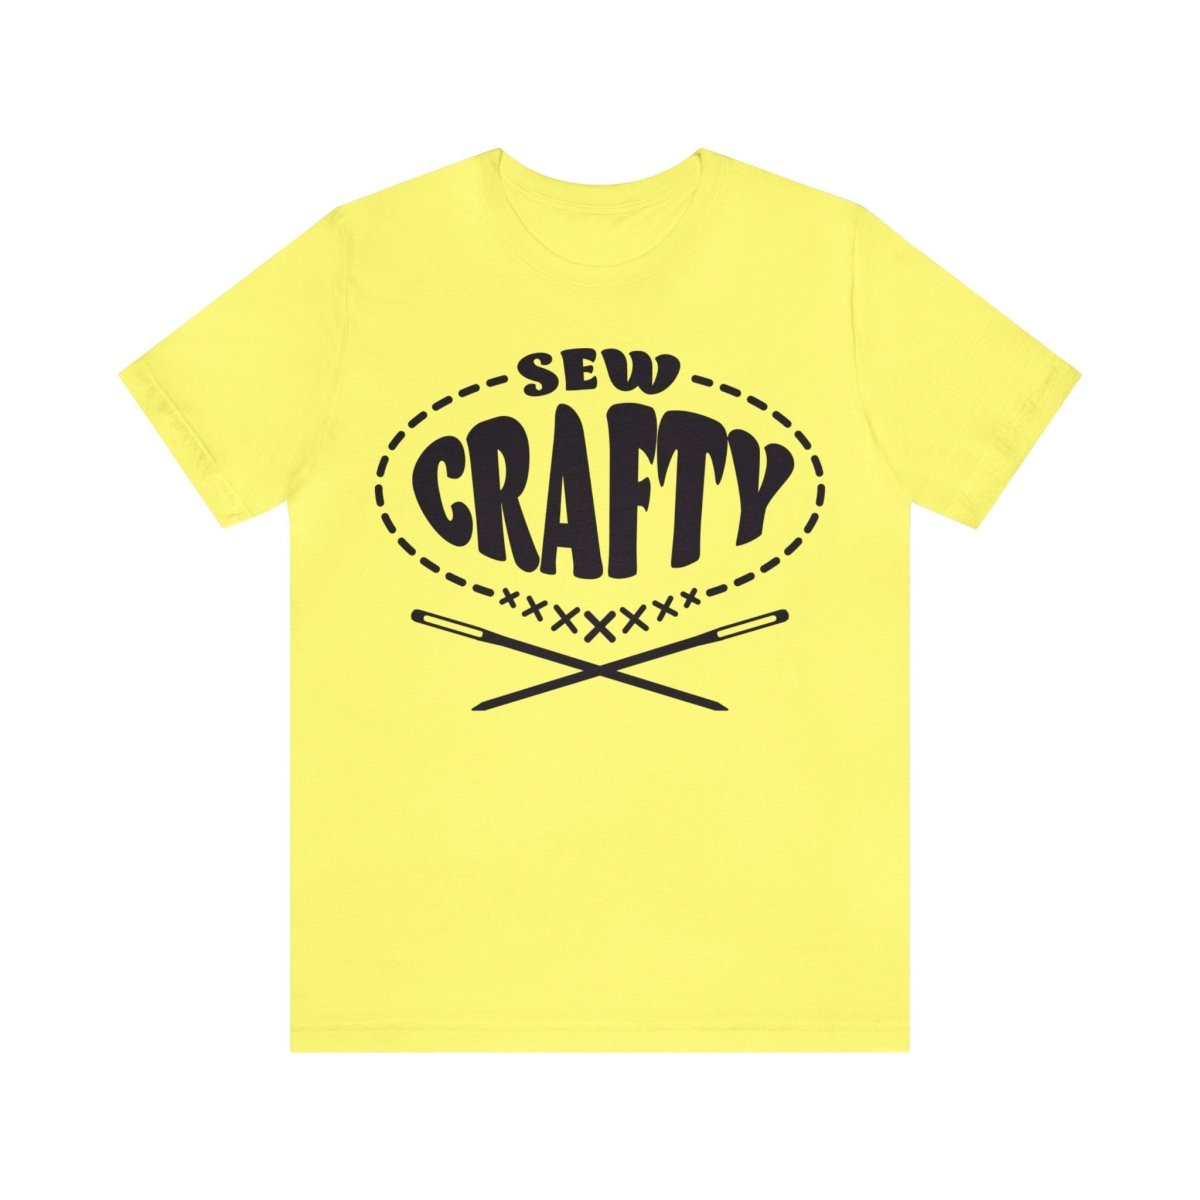 Sew Crafty Premium T-Shirt, Sewing, Stitch, Needlepoint, Embroidery, Craft